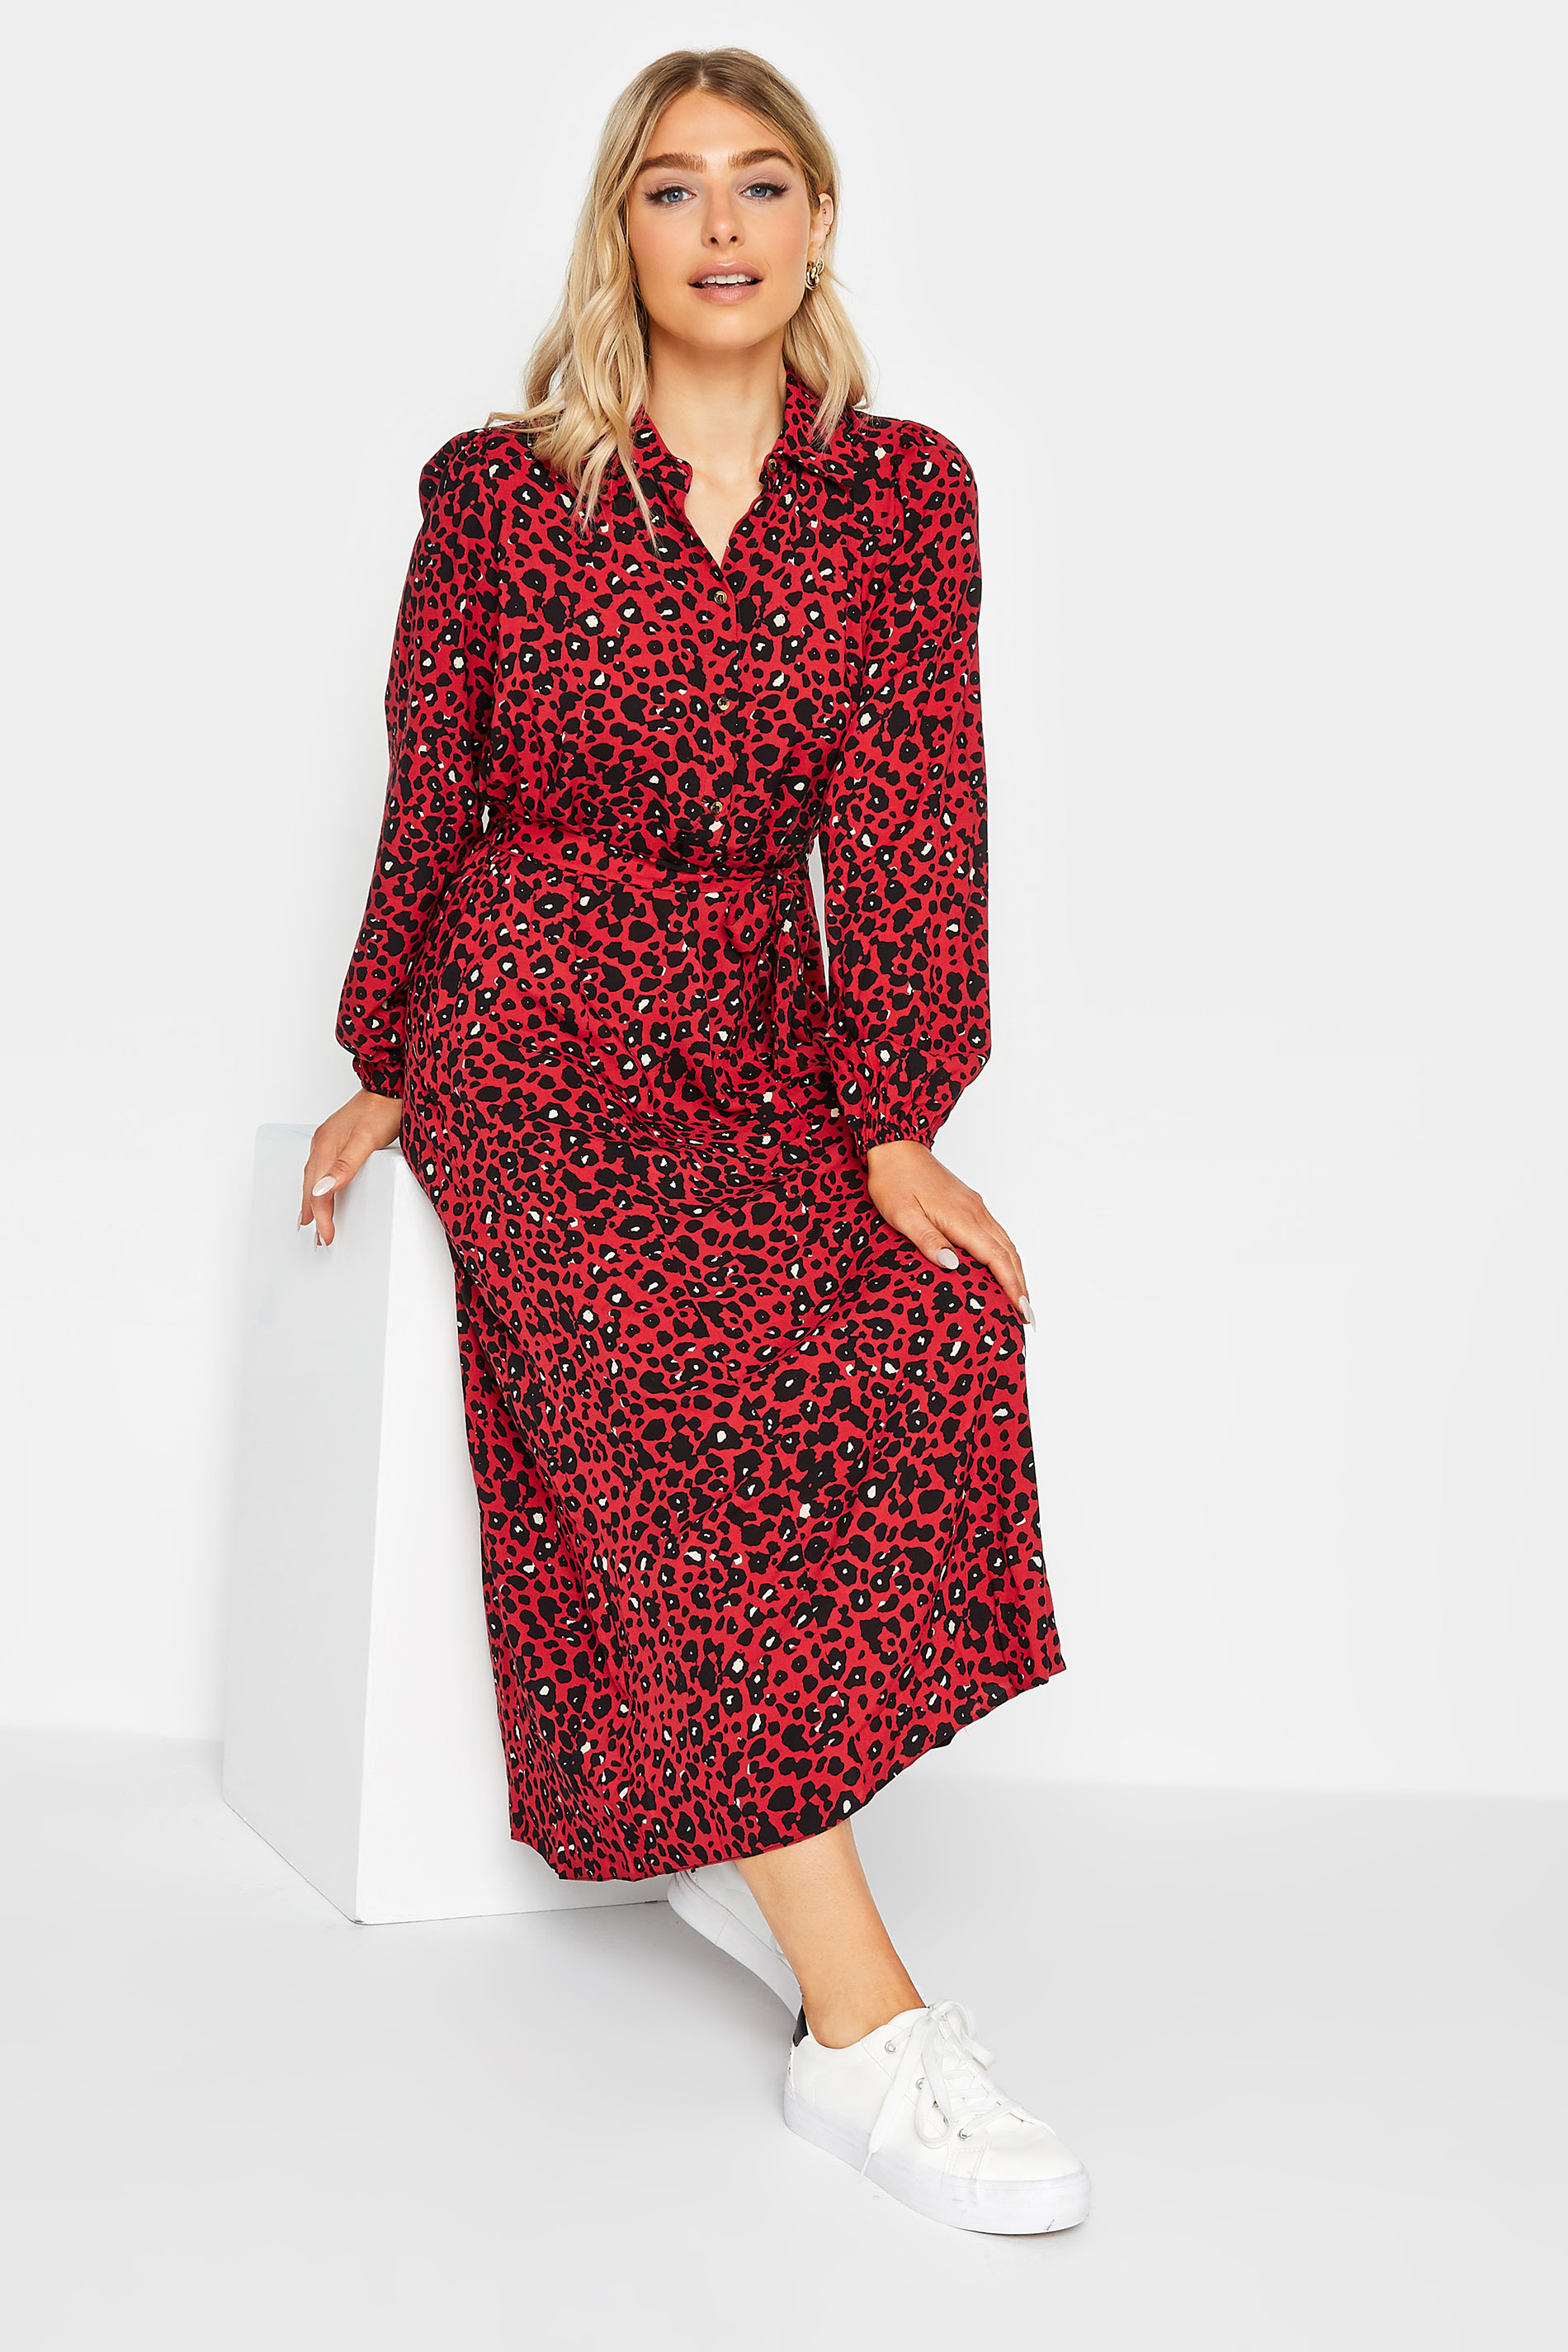 M&Co Red Leopard Print Midaxi Shirt Dress | M&Co 2